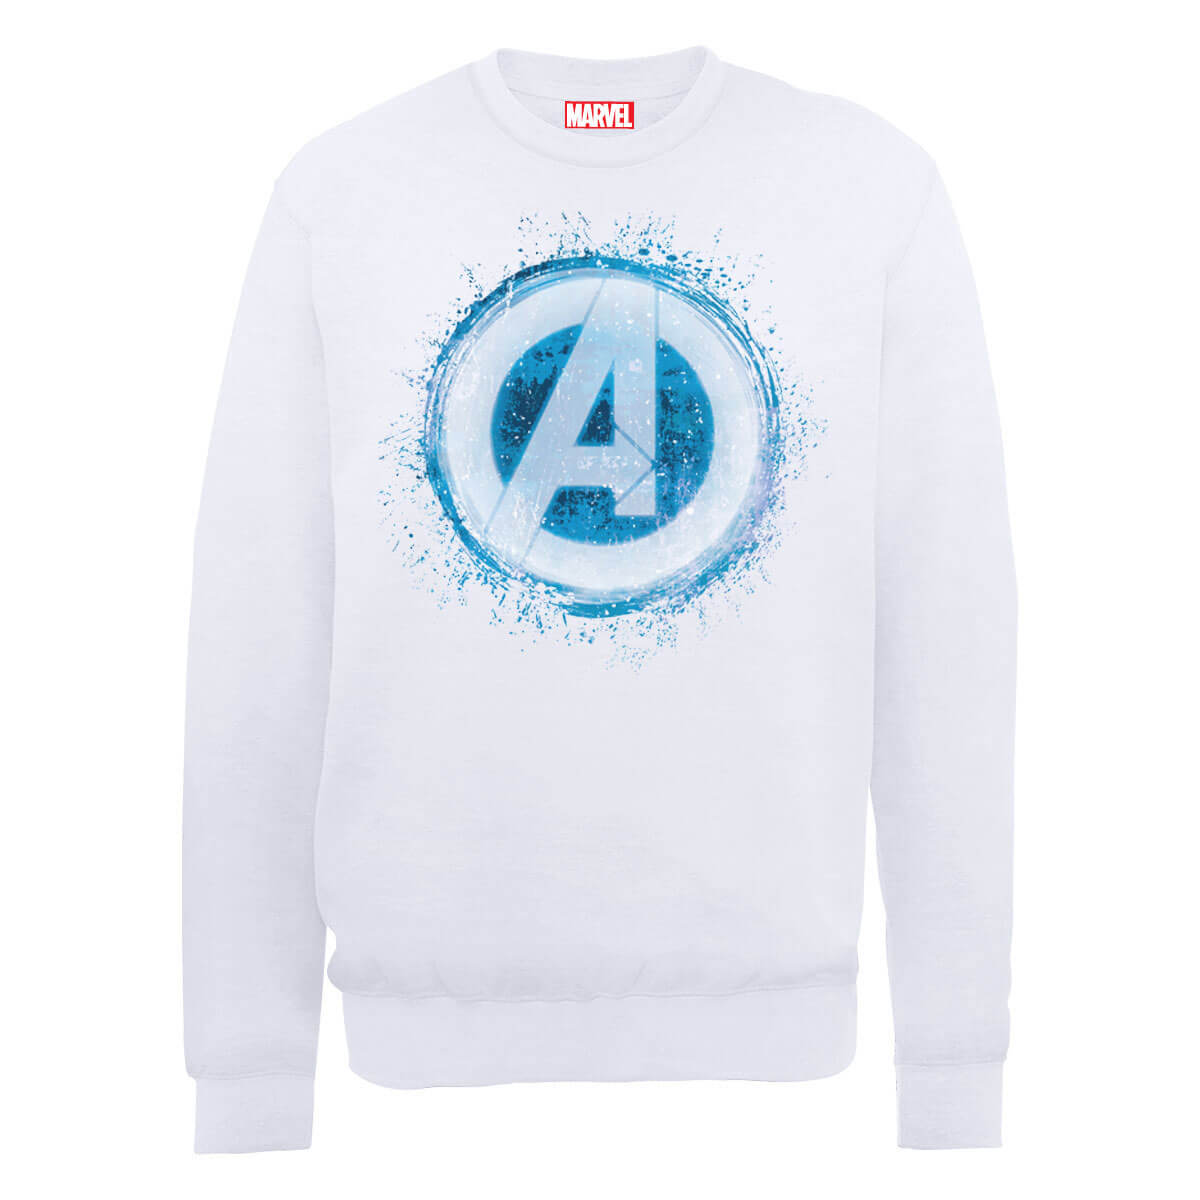 Marvel Avengers Assemble Glowing Logo Sweatshirt - White - XXL